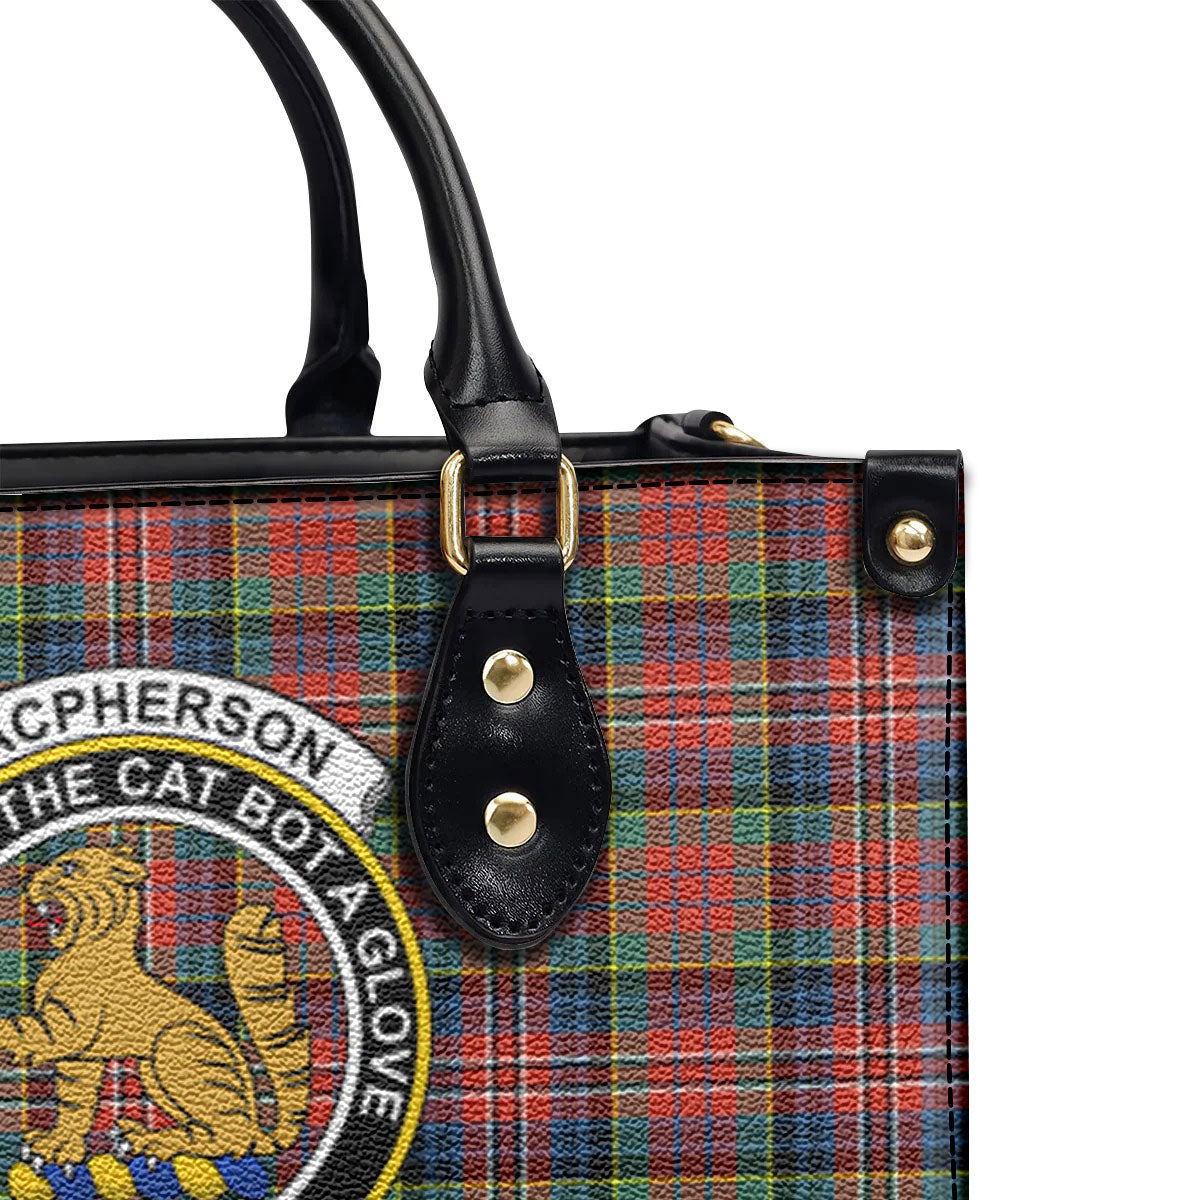 MacPherson Ancient Tartan Crest Leather Handbag